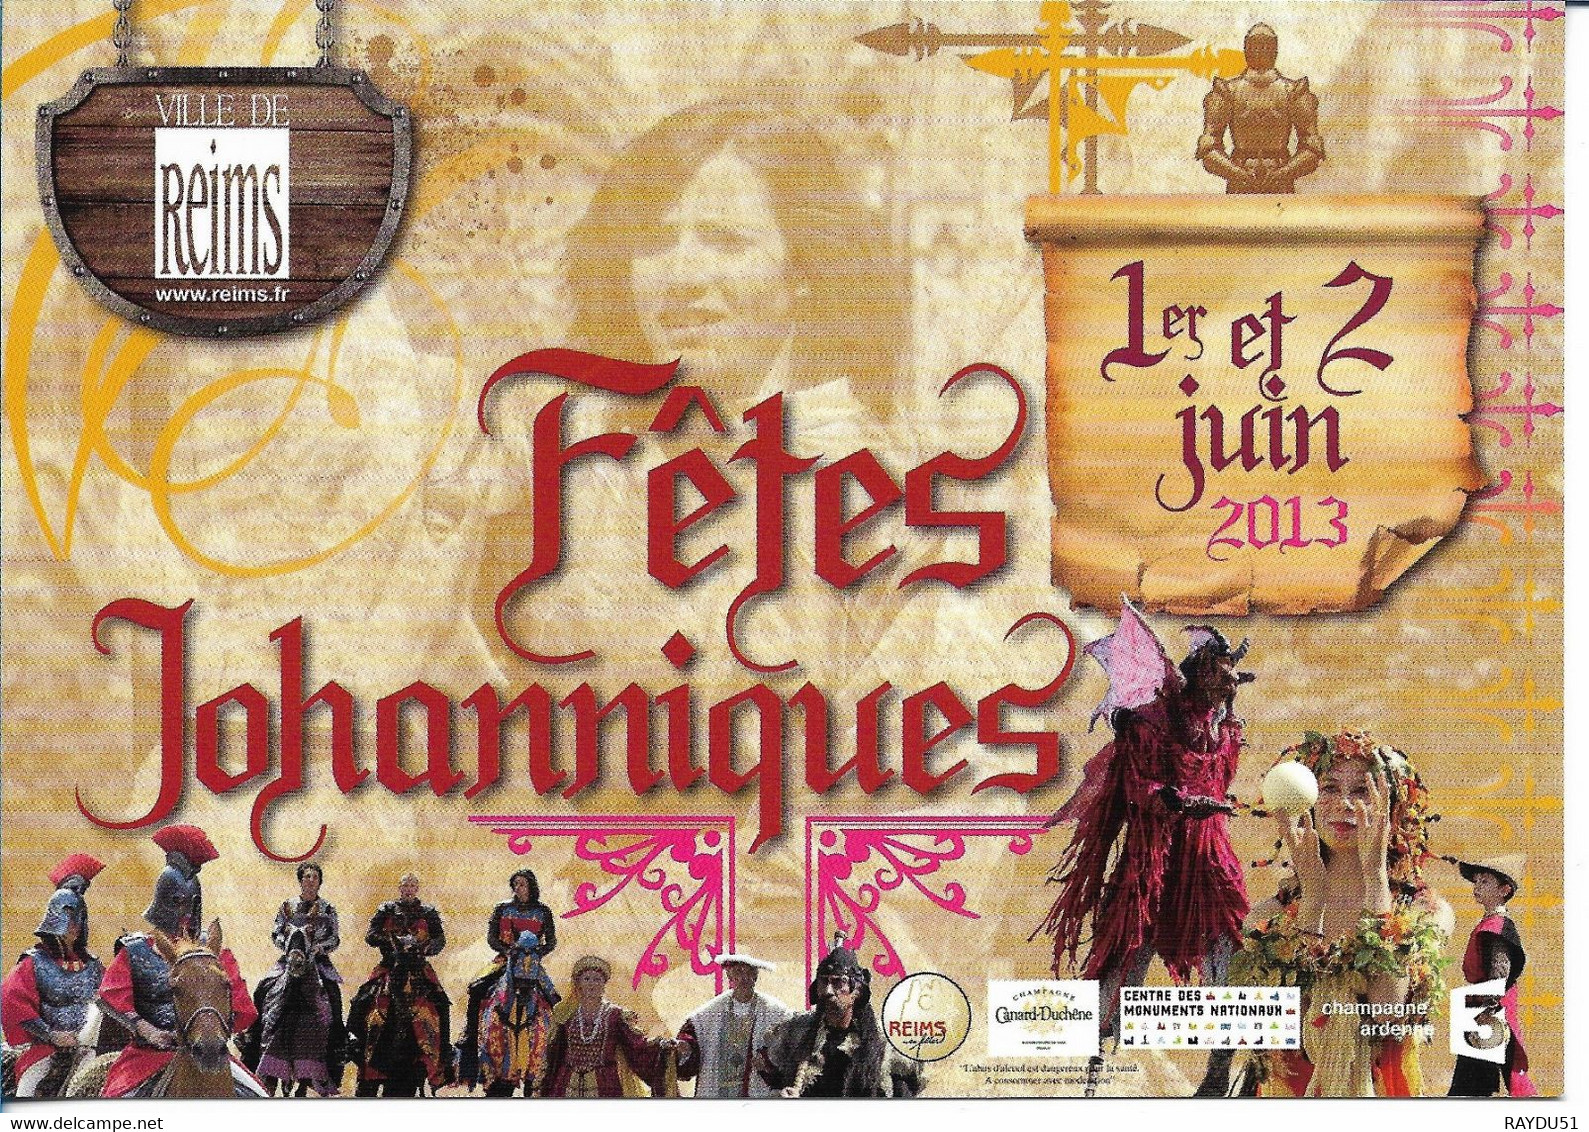 FETES JOHANNIQUES 2013 - Champagne-Ardenne